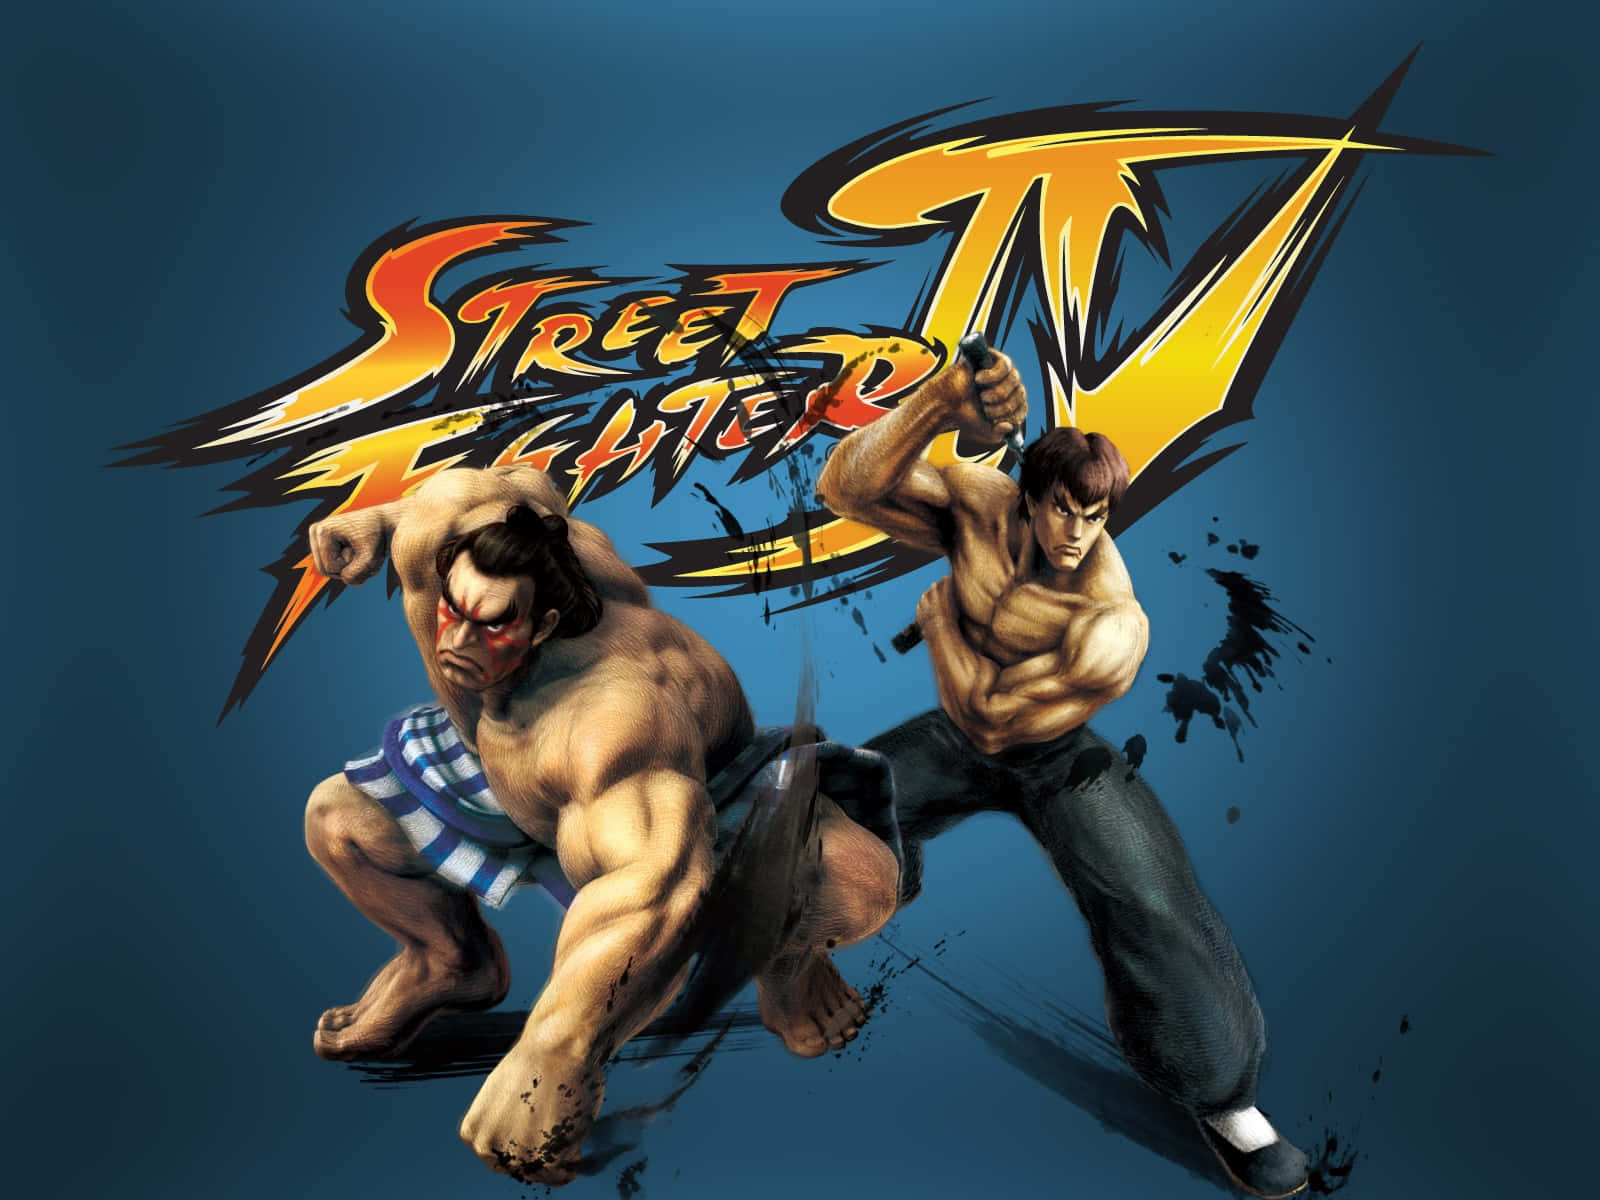 Street Fighter E Hondaand Ryu Action Pose Wallpaper